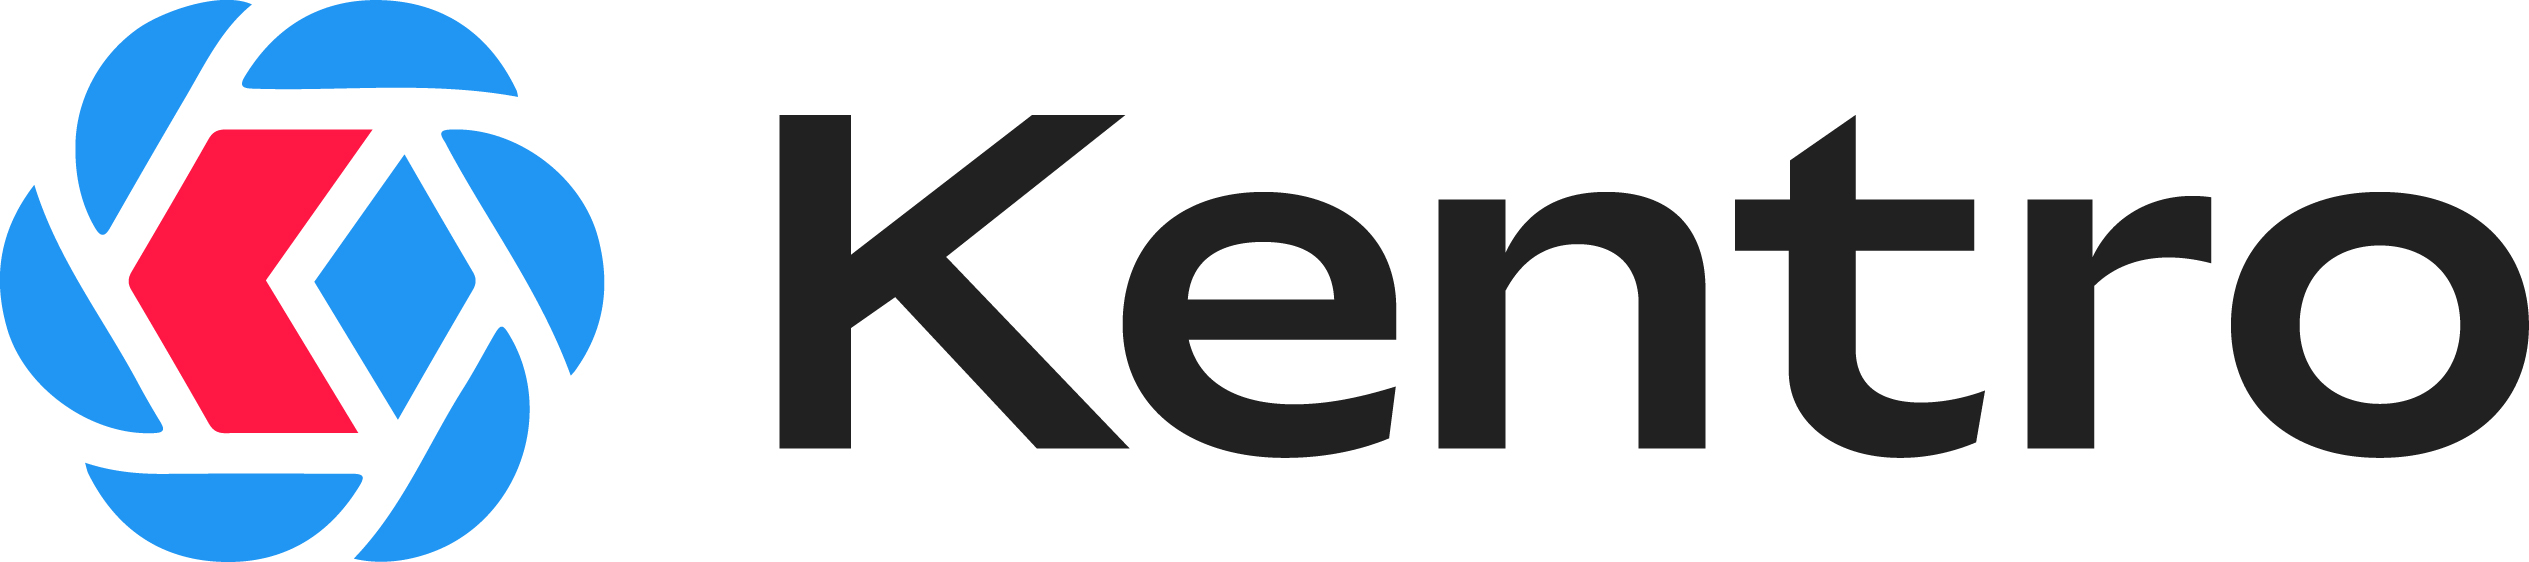 Kentroio logo